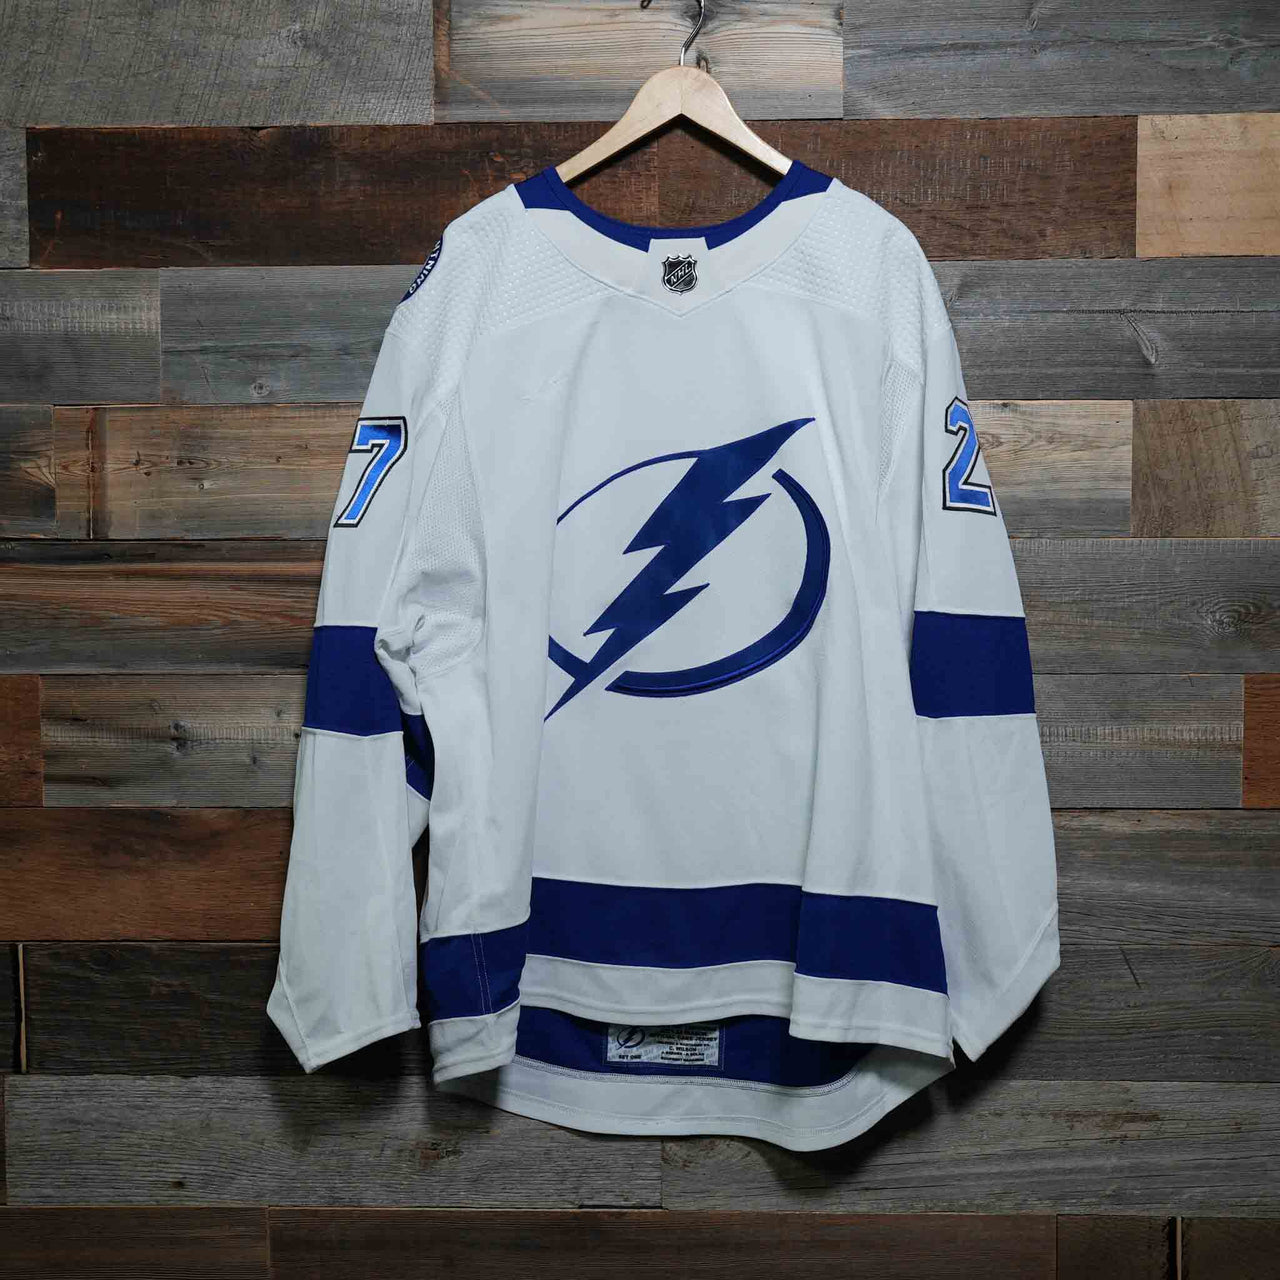 New Reebok NHL Tampa Bay Lightning Long Sleeve Dri-Fit Shirt